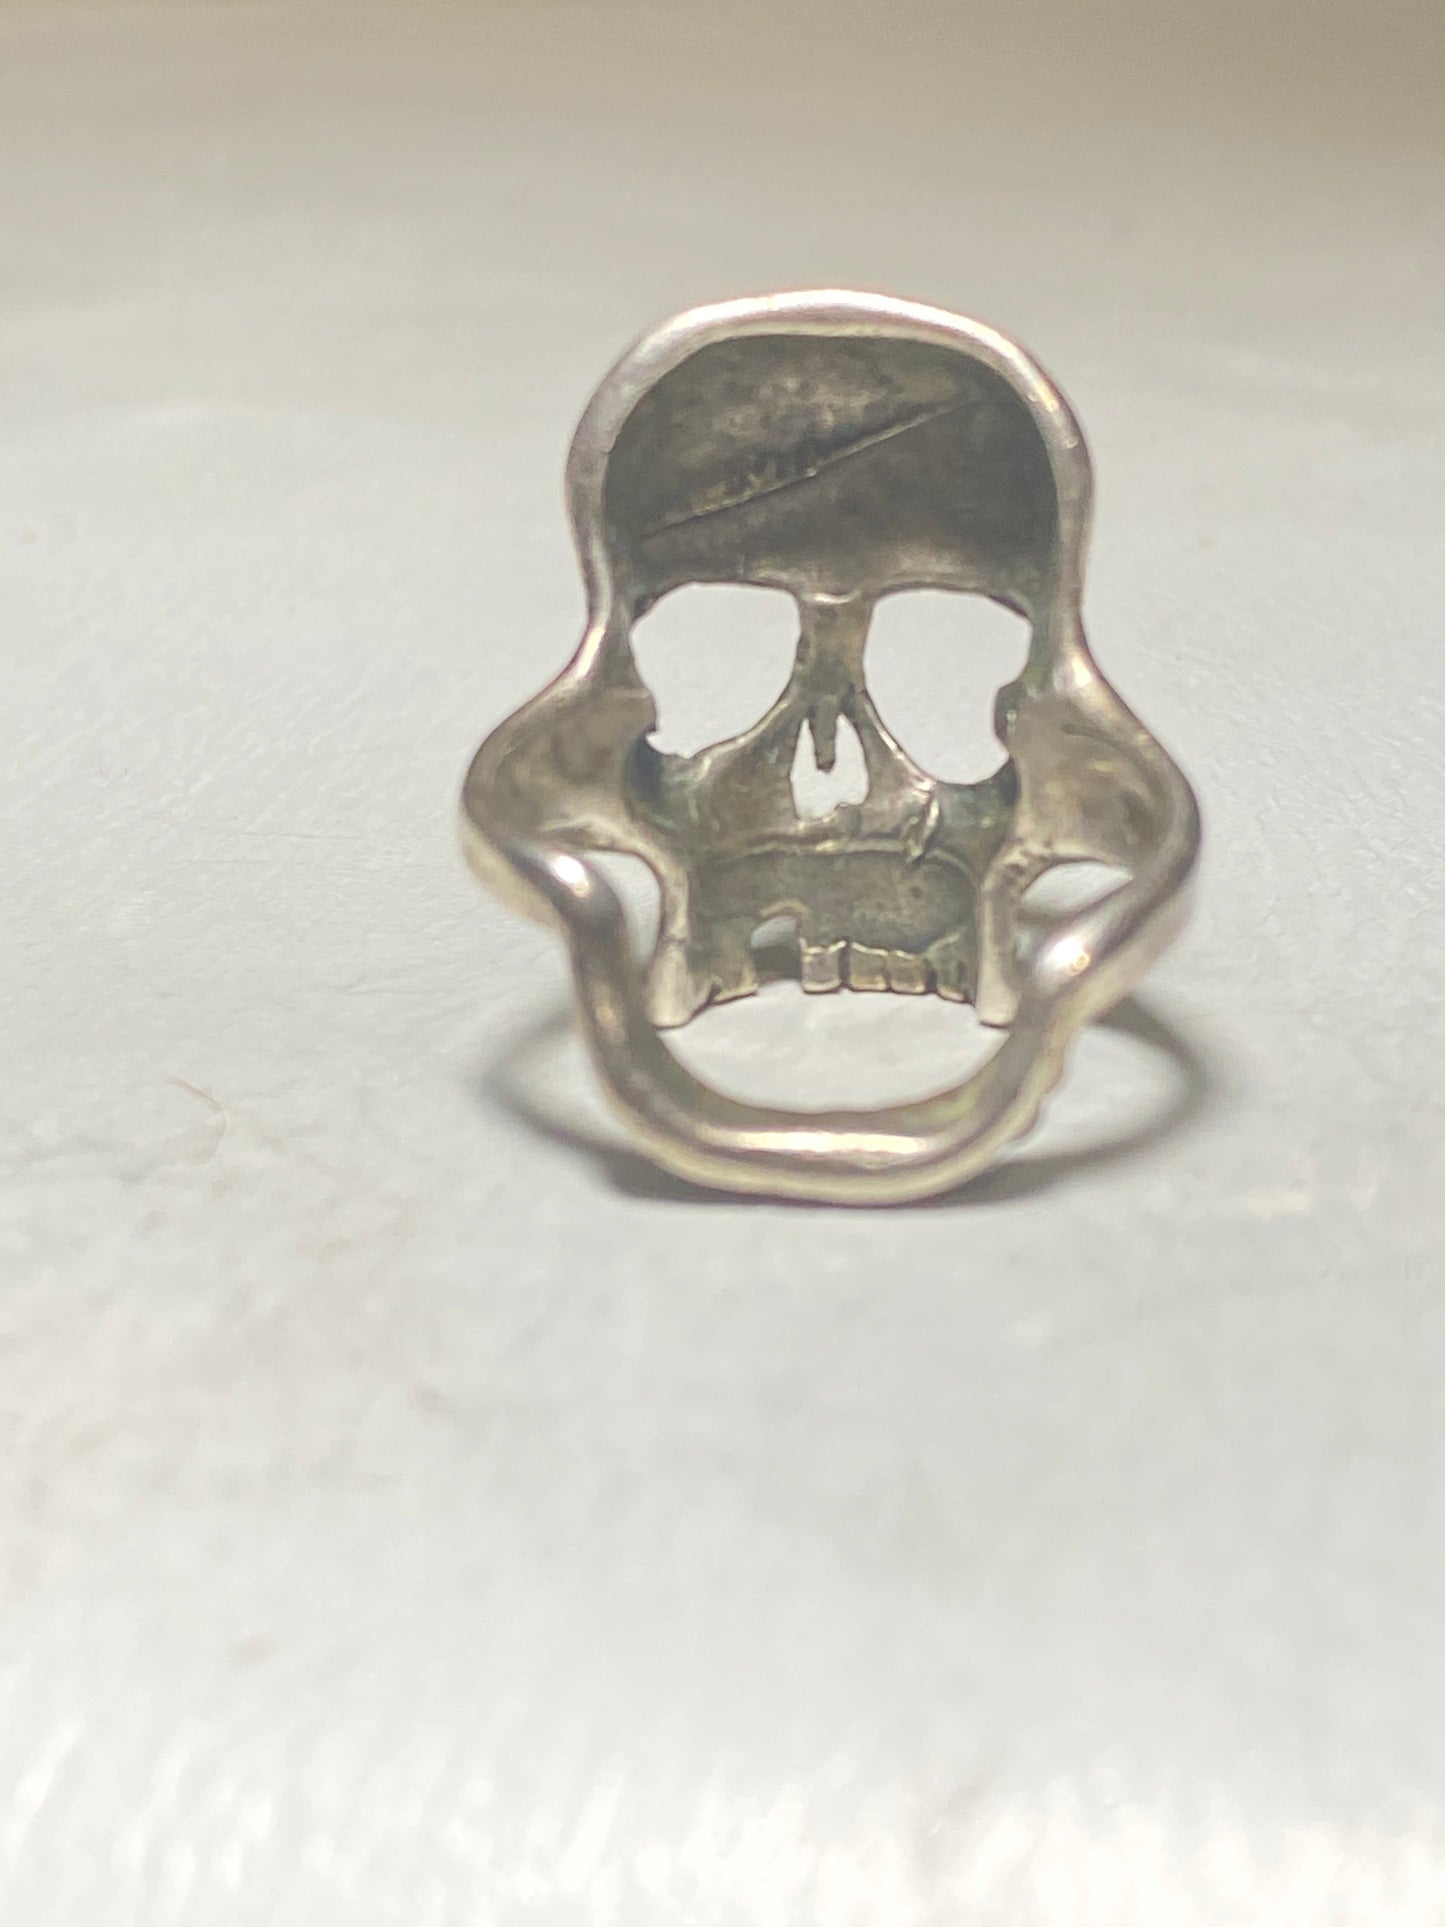 Skull ring pinky biker sterling silver band women